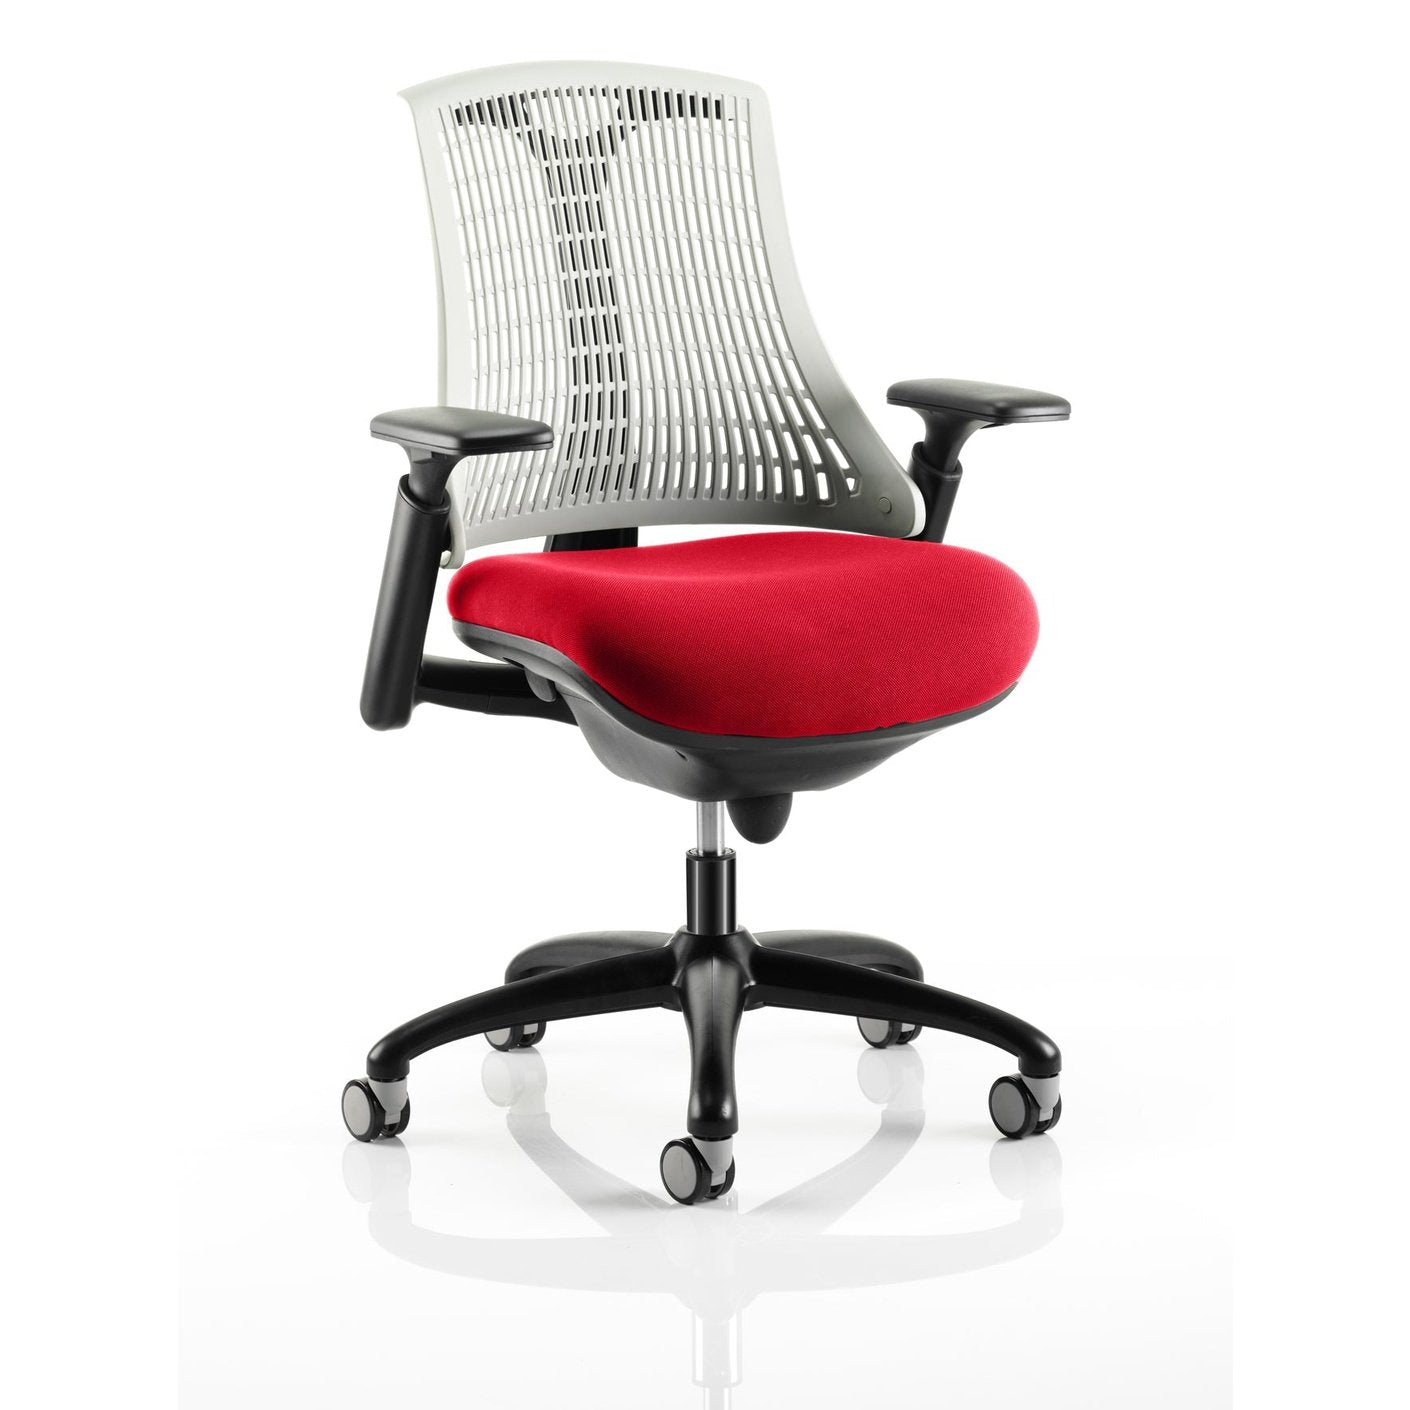 Flex Medium Back Task Operator Office Chair - Black Frame, Mesh & Fabric, Adjustable Arms, 110kg Capacity, 8hr Use, Flat Packed - 2Yr Mechanism Warranty